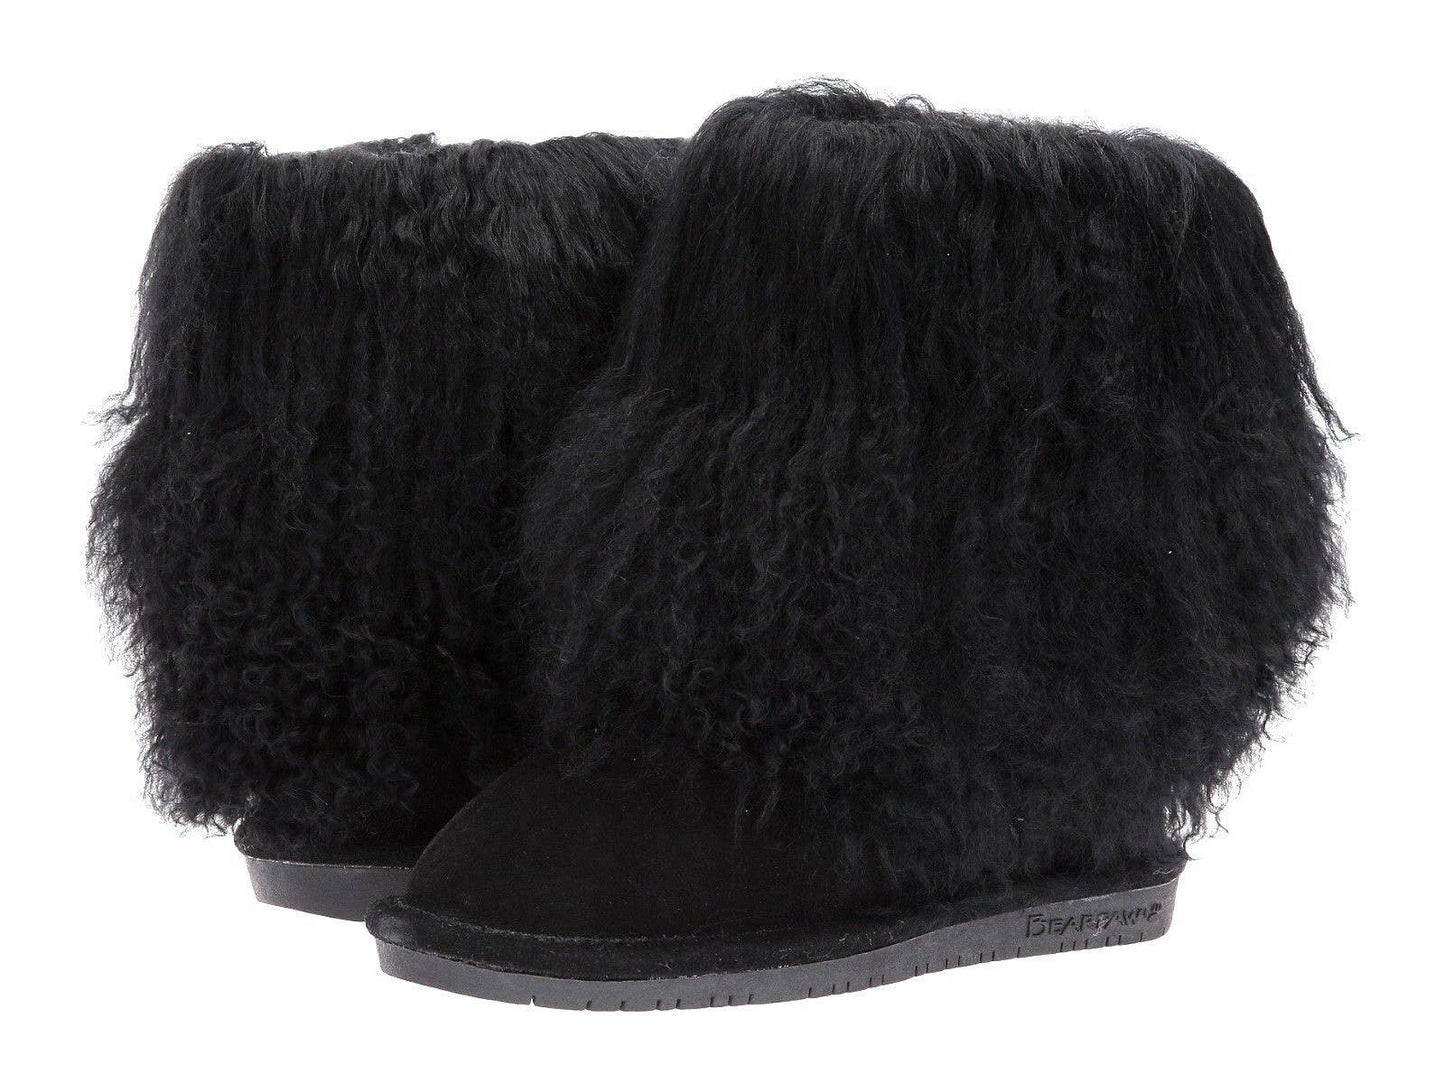 Bearpaw Boo Youth Black Little Kid/Big Kid Girls Winter Boot Size US 3 EUR 34 - SVNYFancy